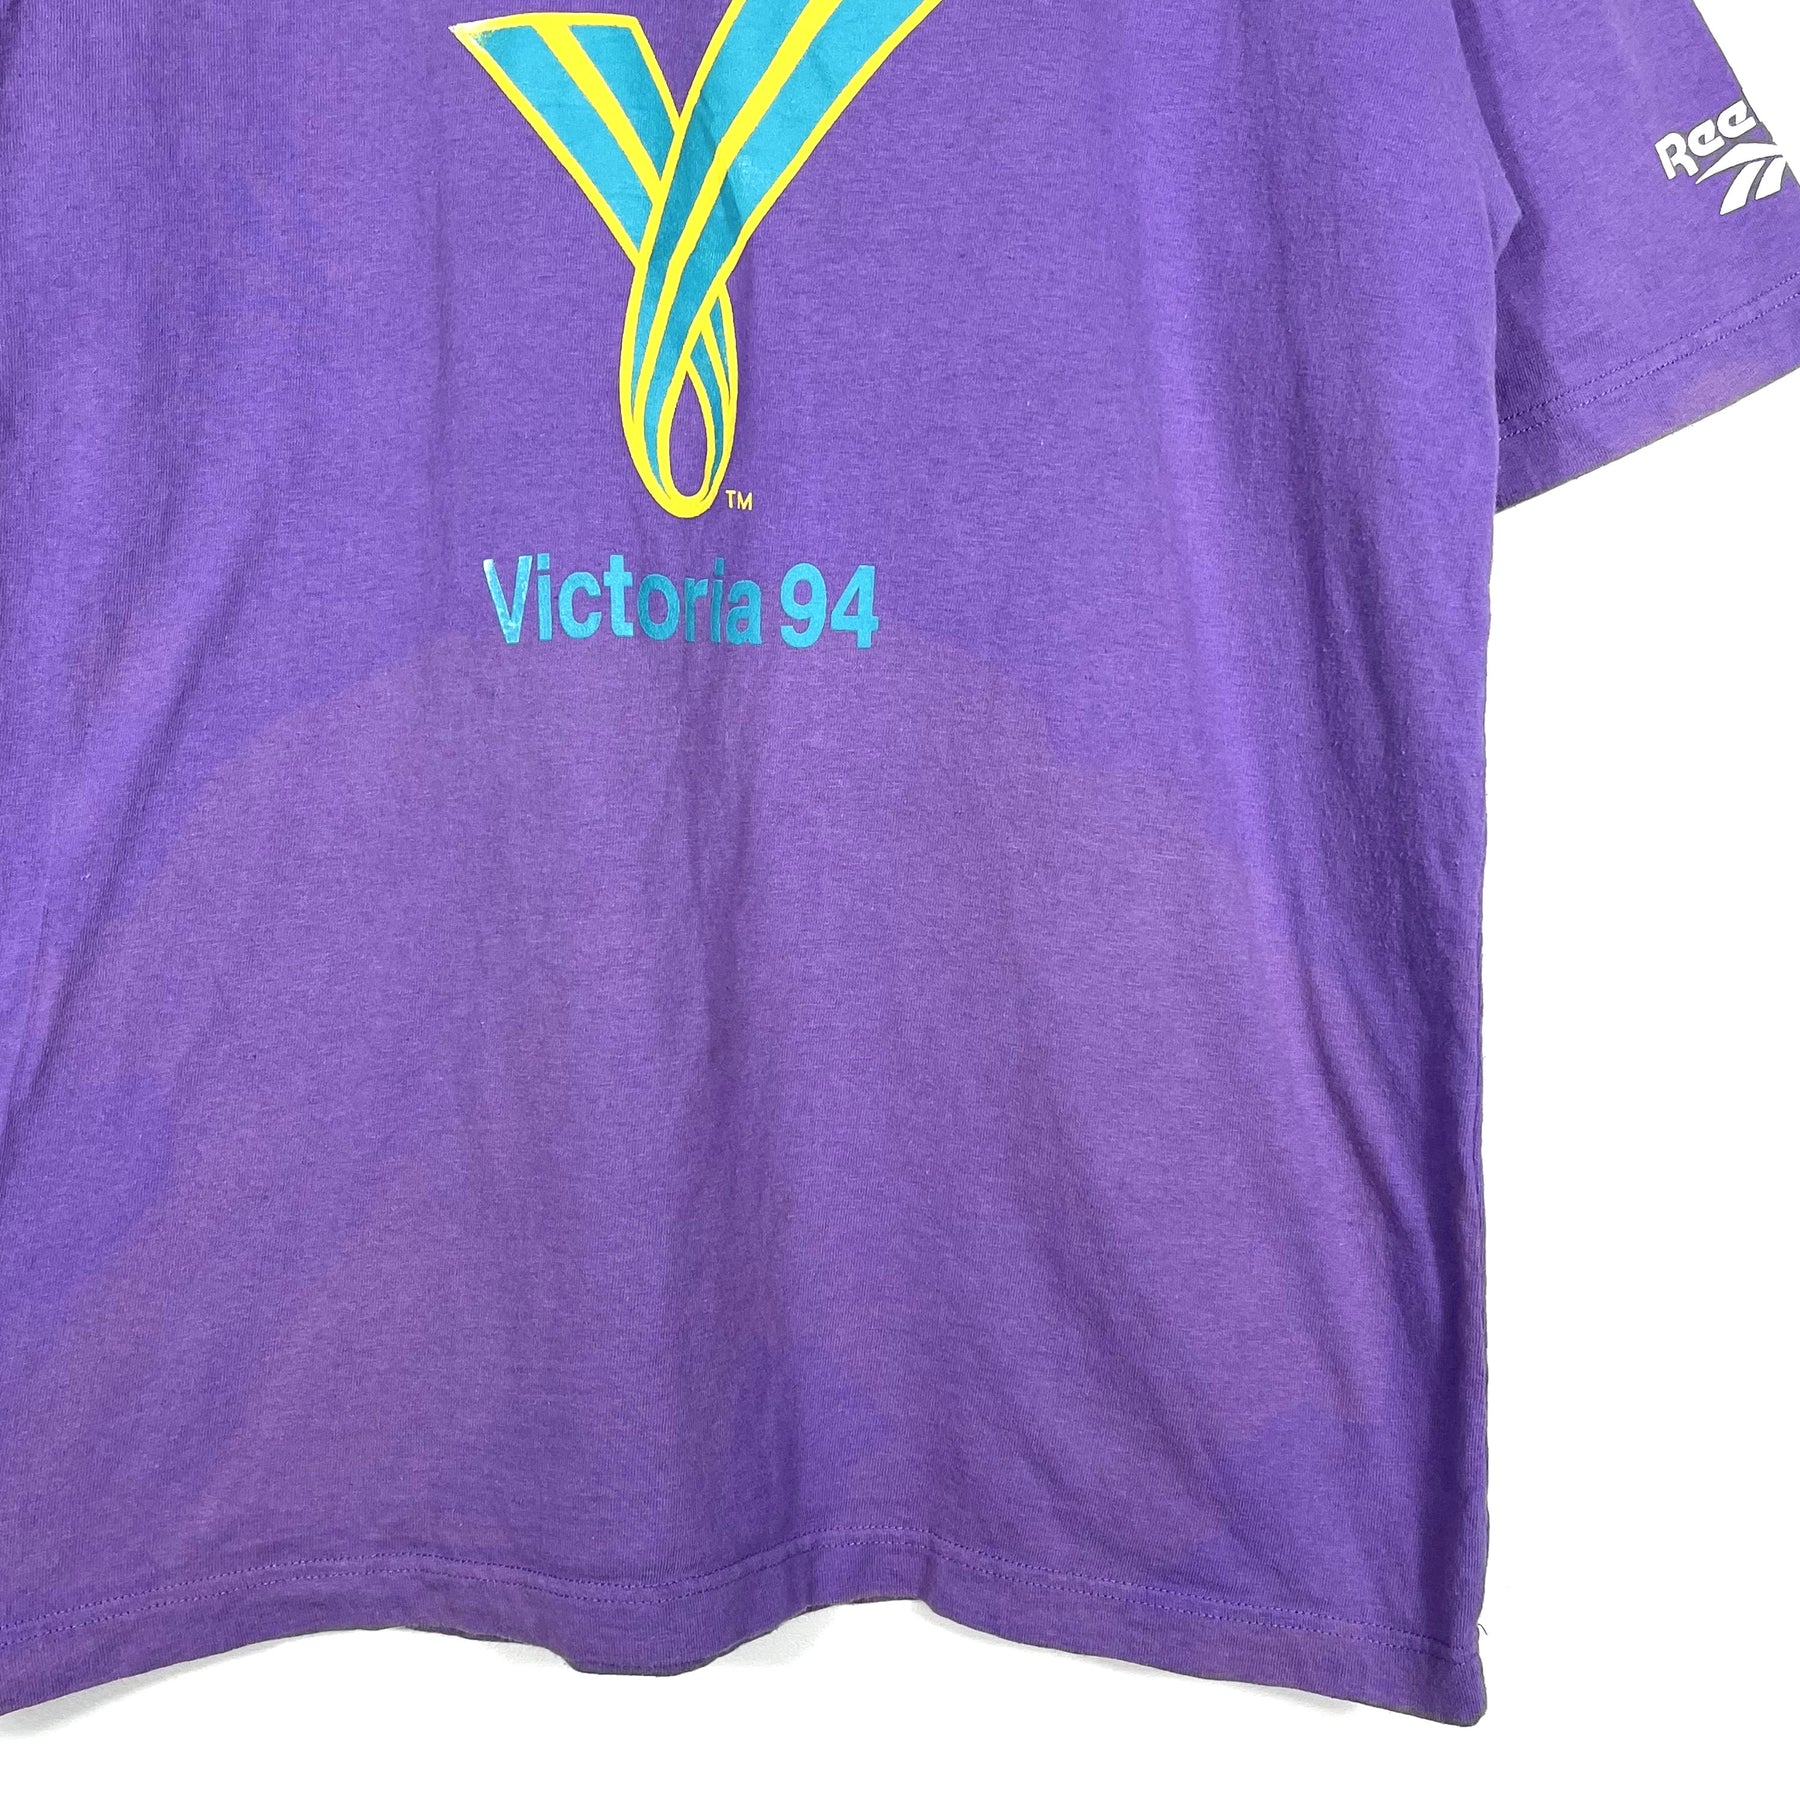 Vintage 1994 Reebok Commonwealth Games Victoria T-Shirt  - Men's Small